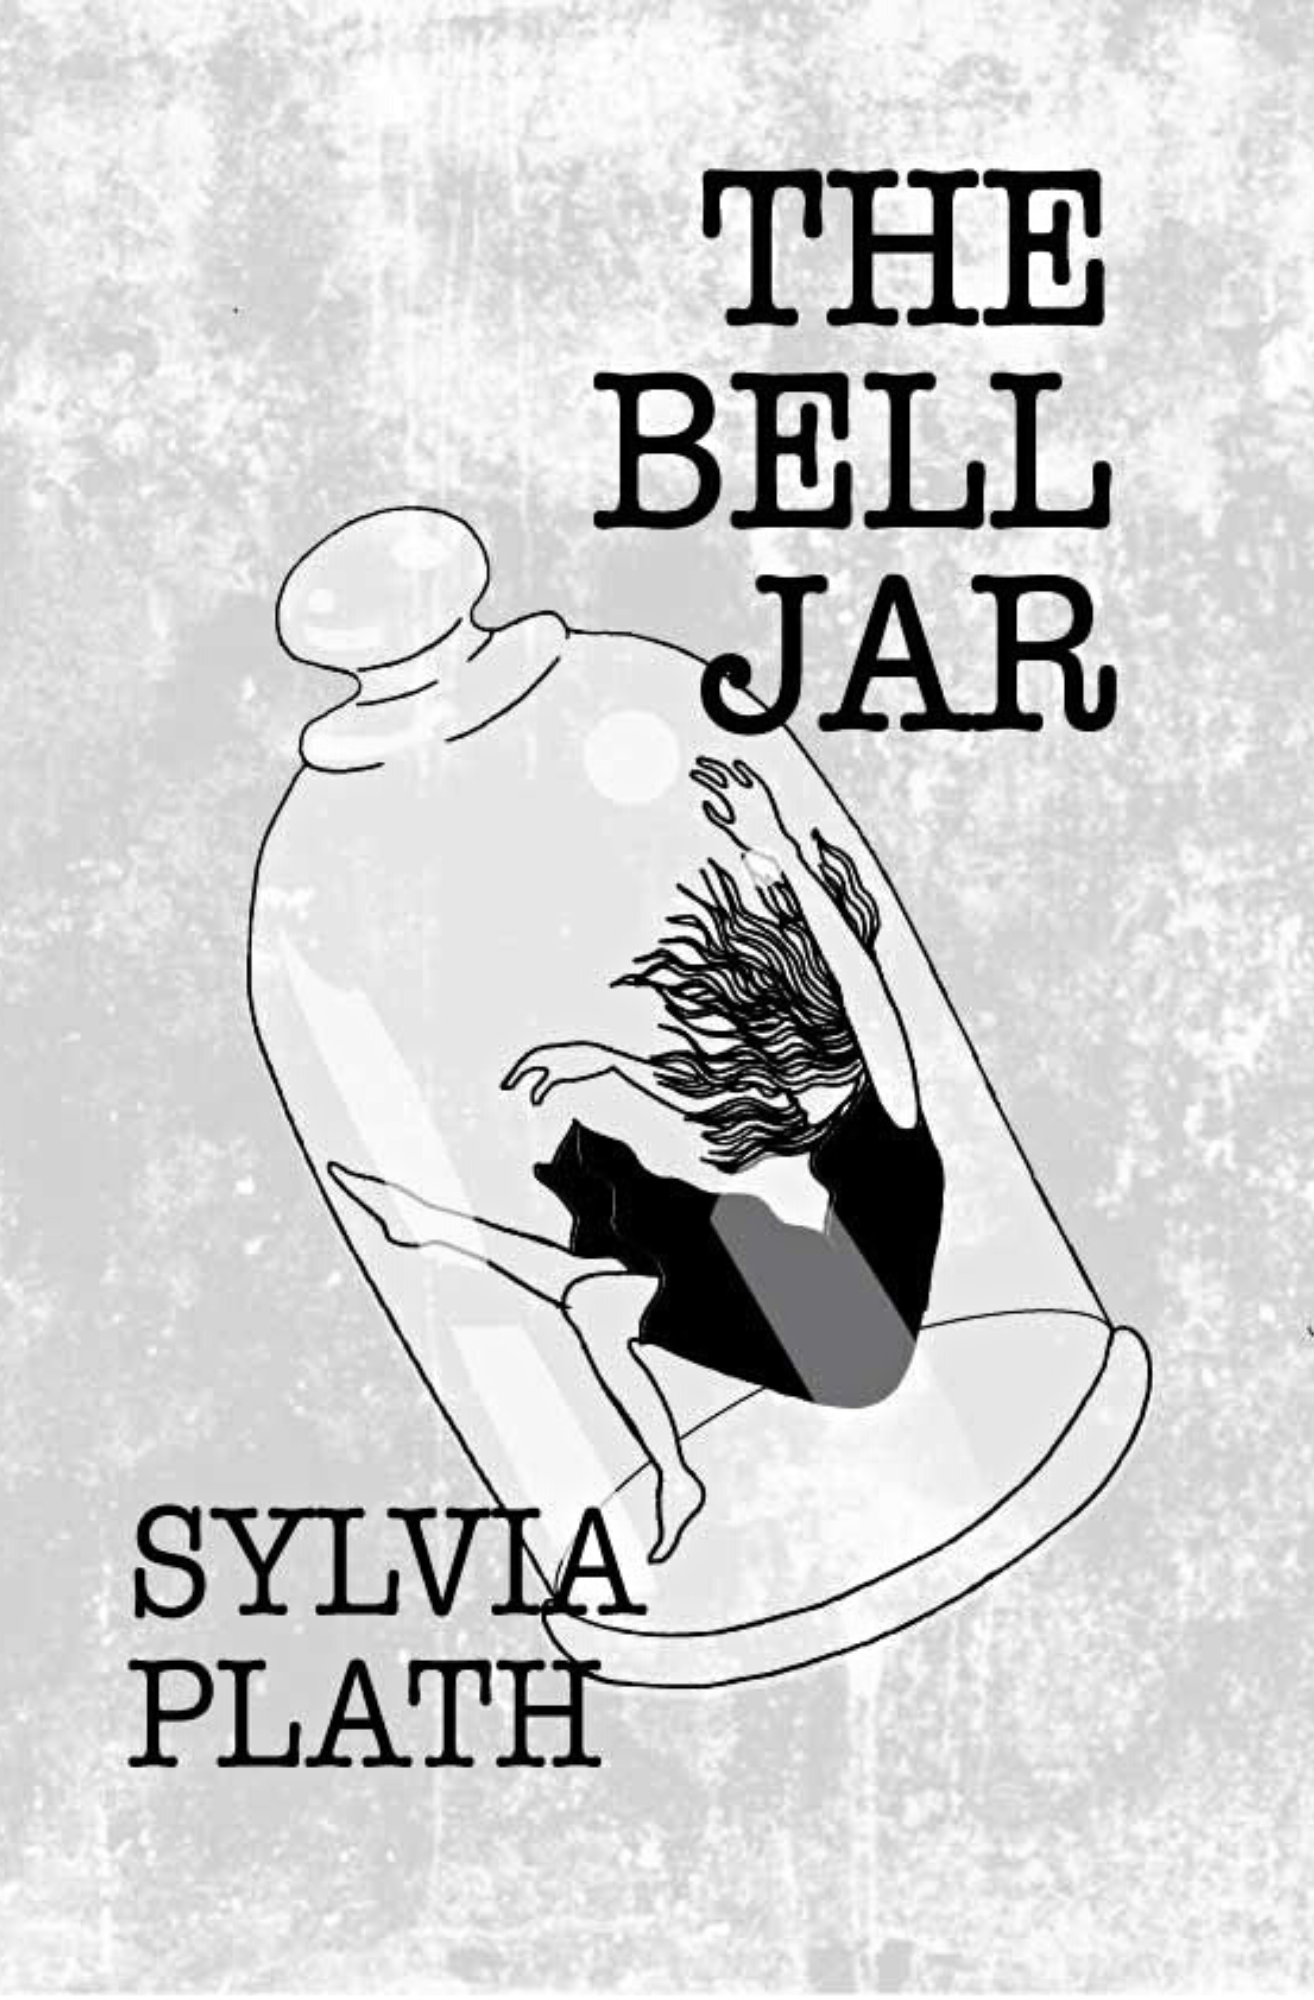 The Bell Jar, Sylvia Plath